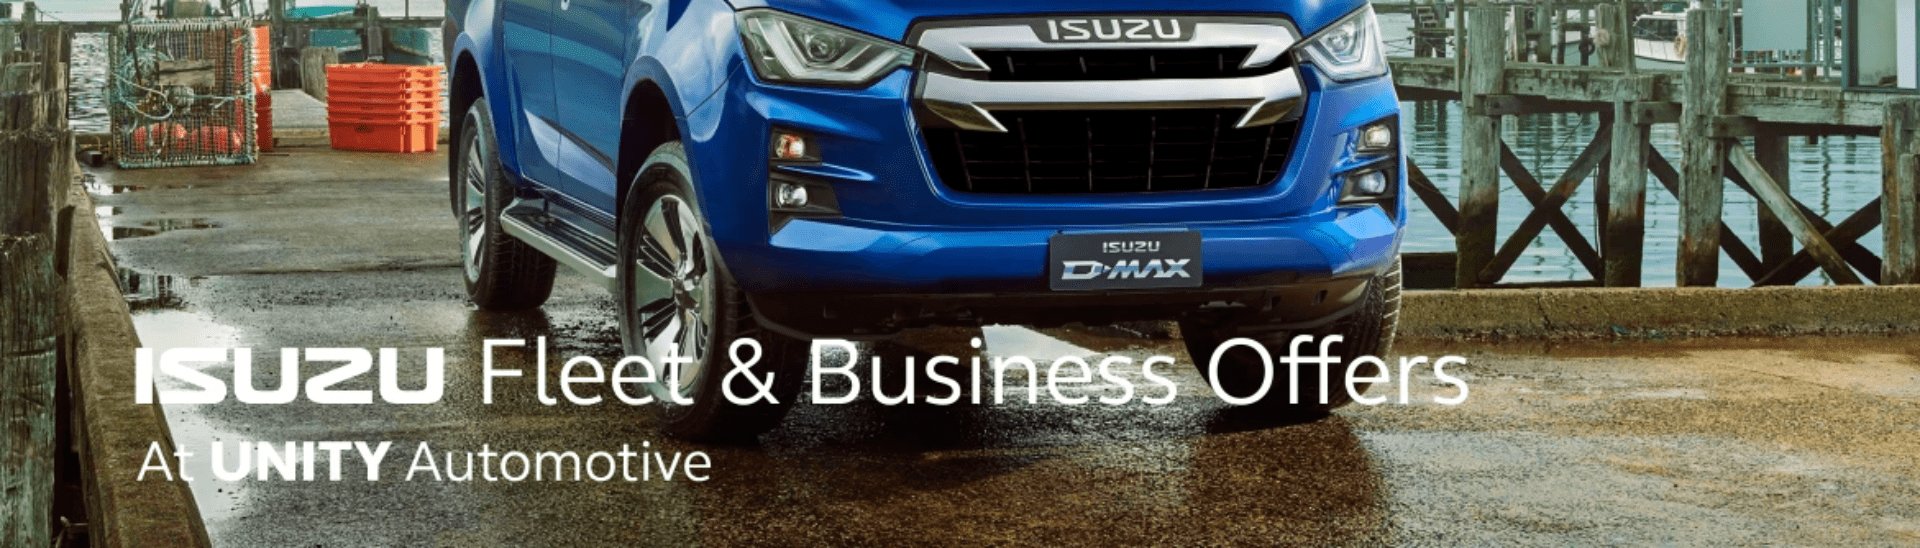 Isuzu Fleet & Business Offers at Unity Automotive